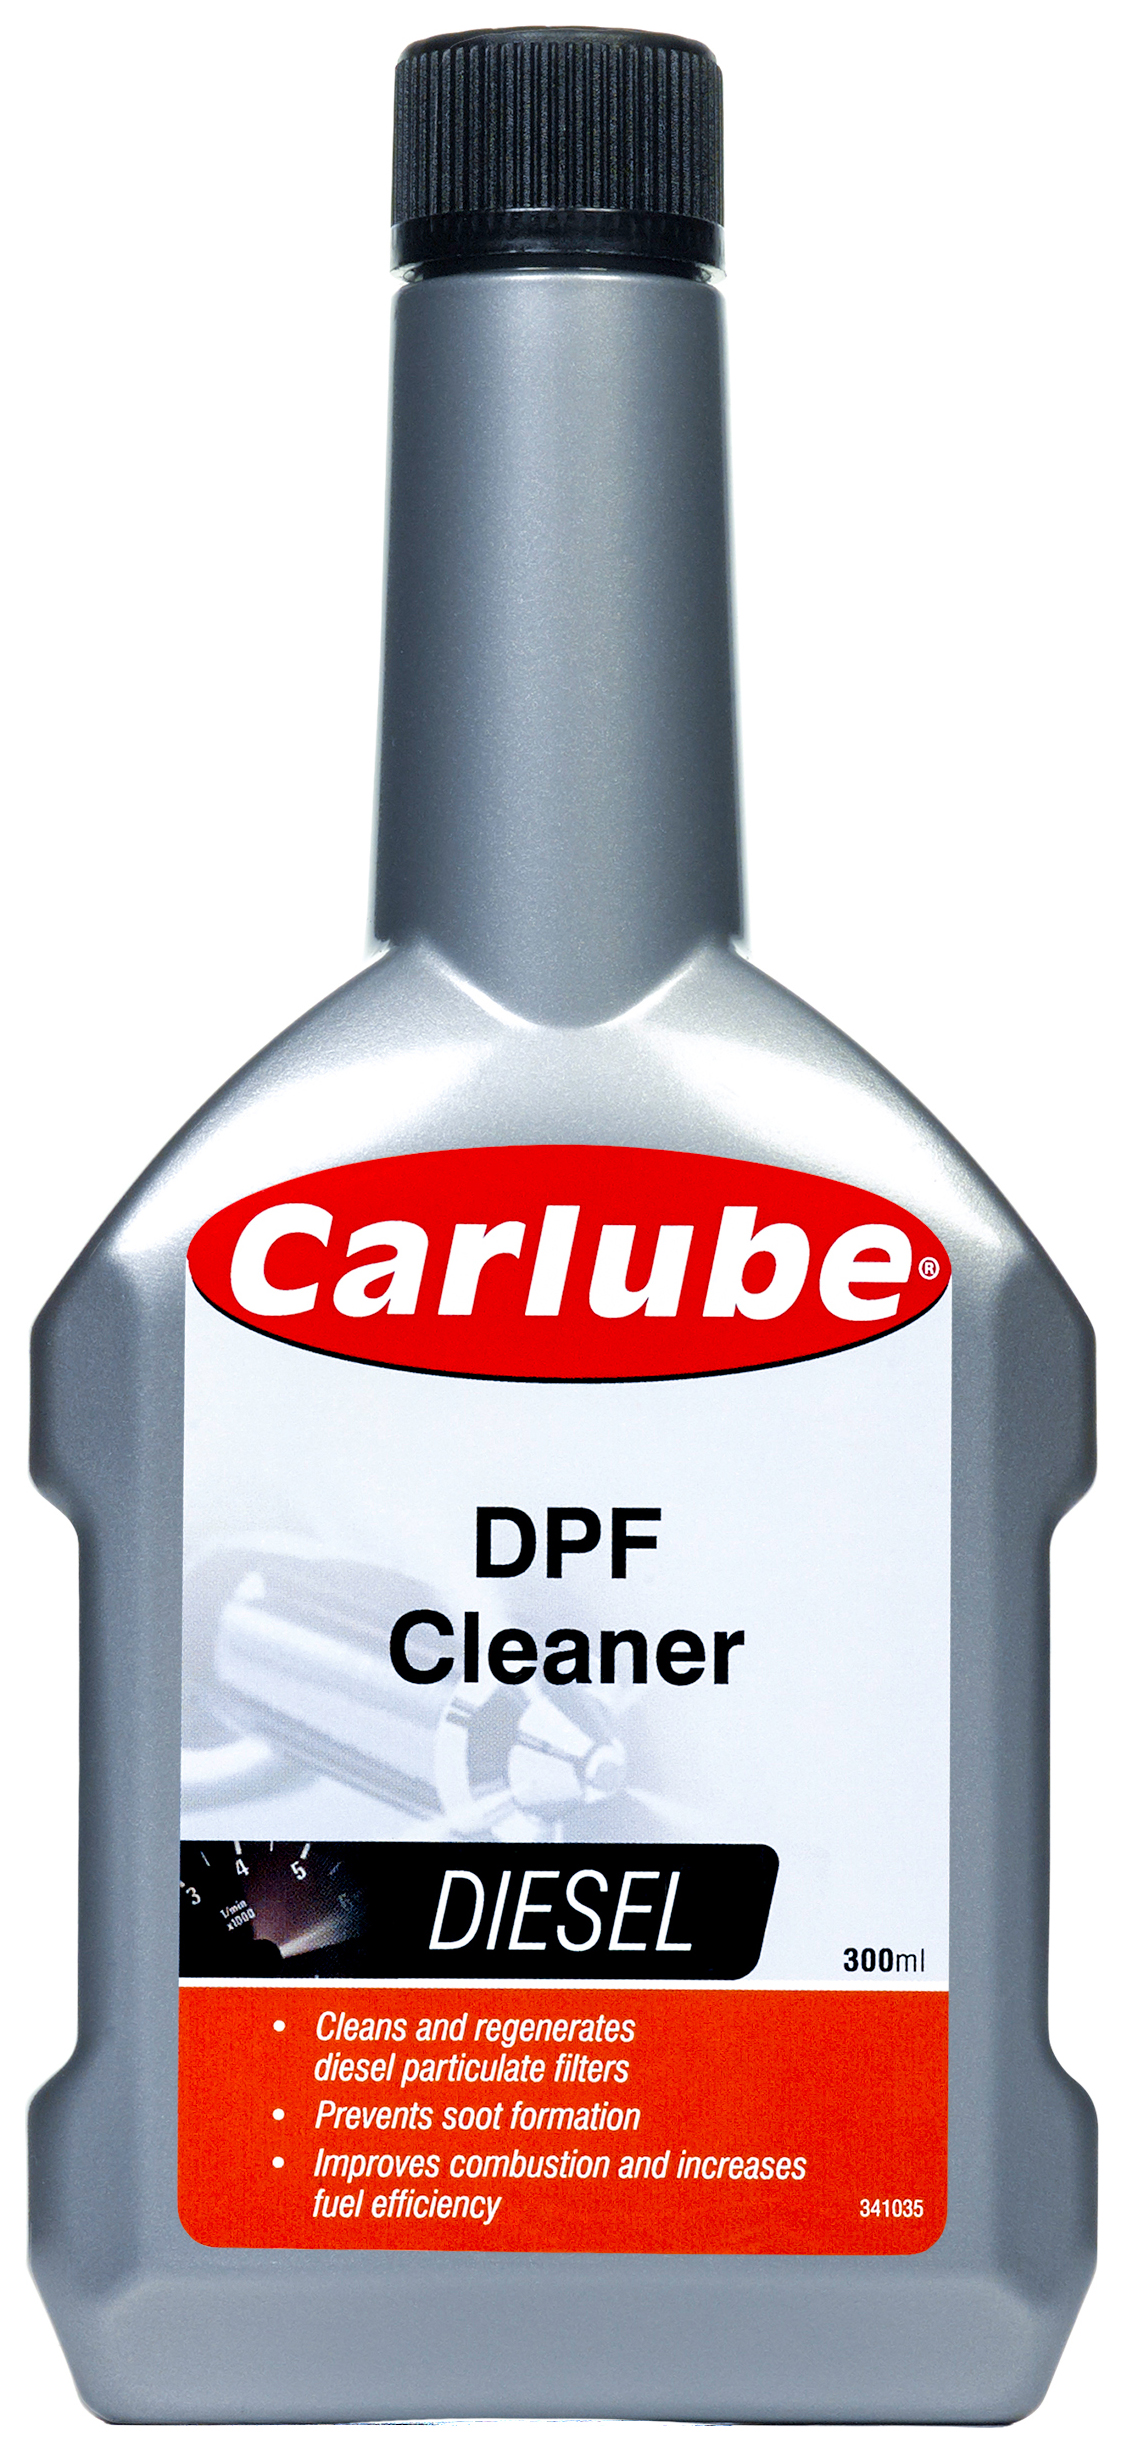 Carlube DPF300 DPF (Diesel Particulate Filter) Cleaner - 300ml